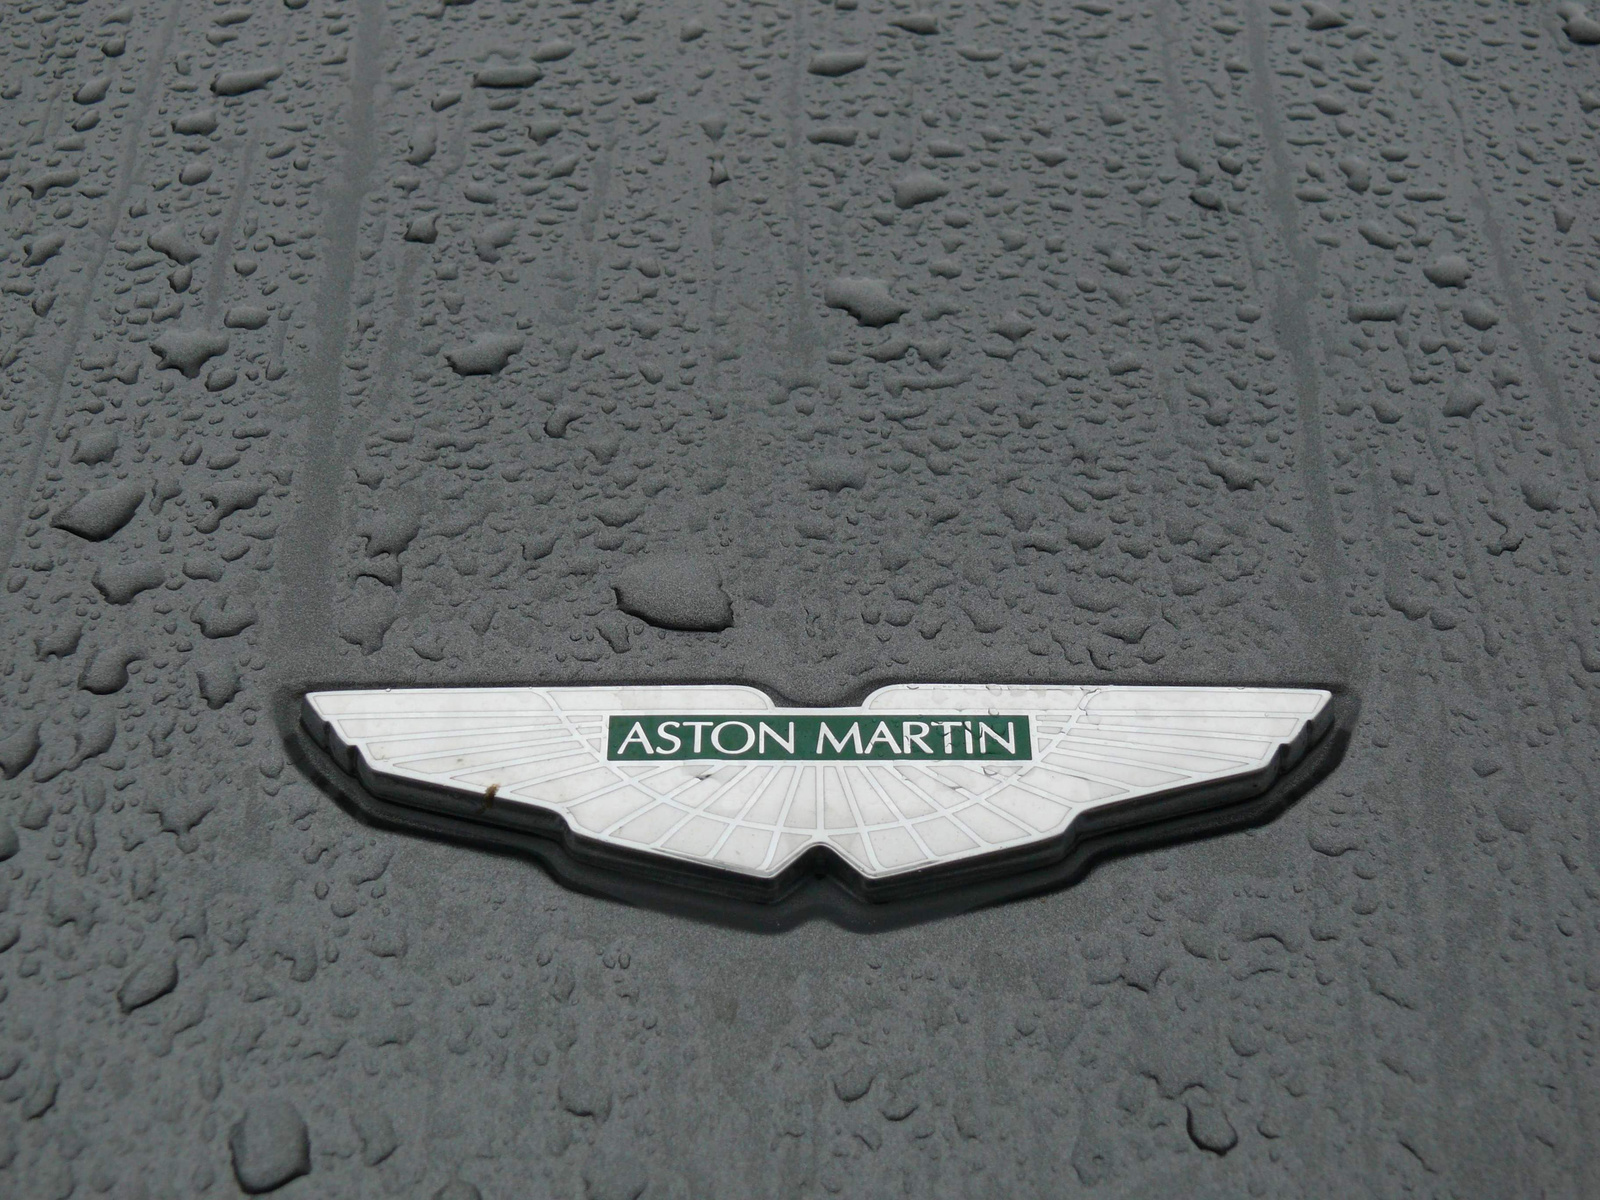 Aston Martin DB9 Volante